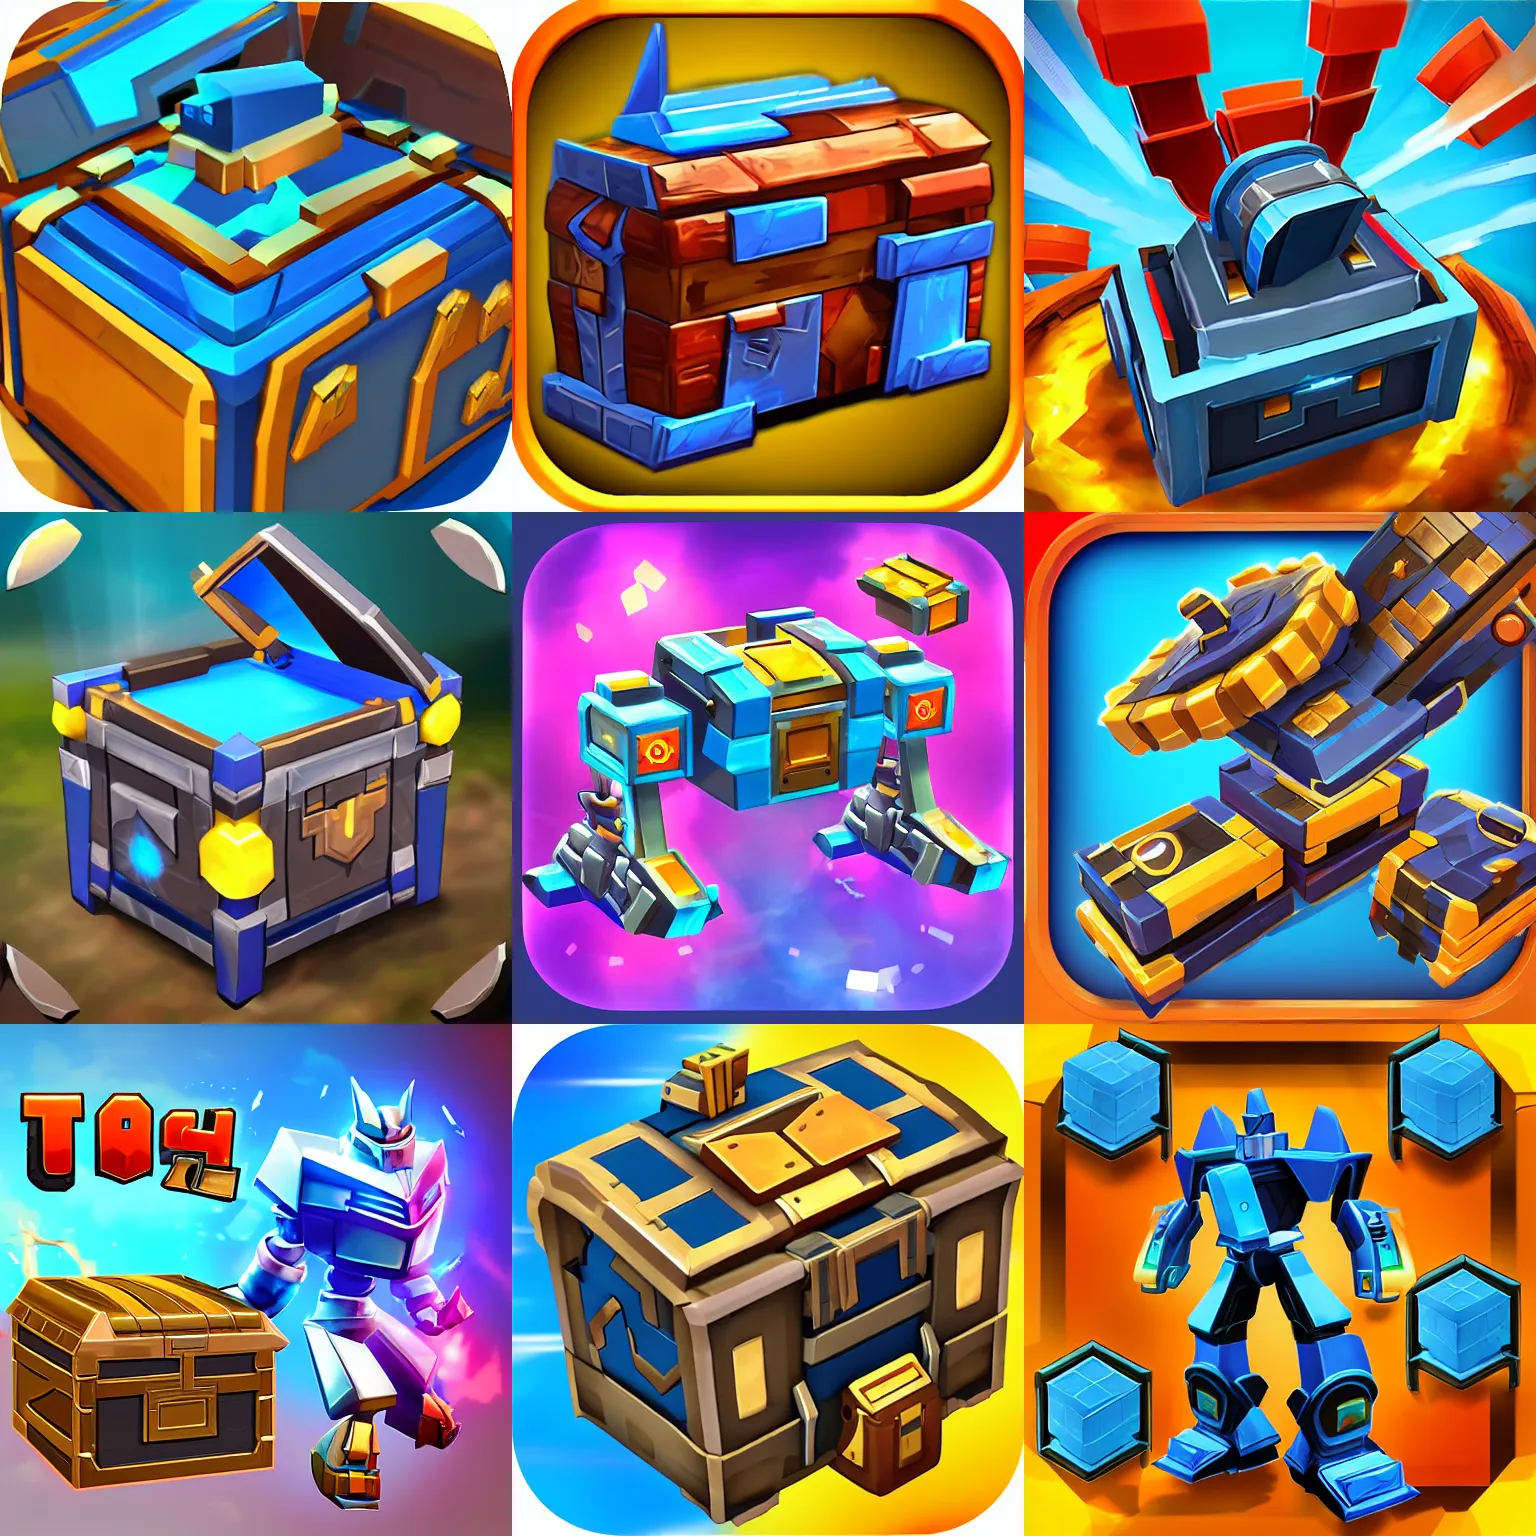 Prompt: futuristic transformer treasure chest, clash royal, stylized, casual mobile game